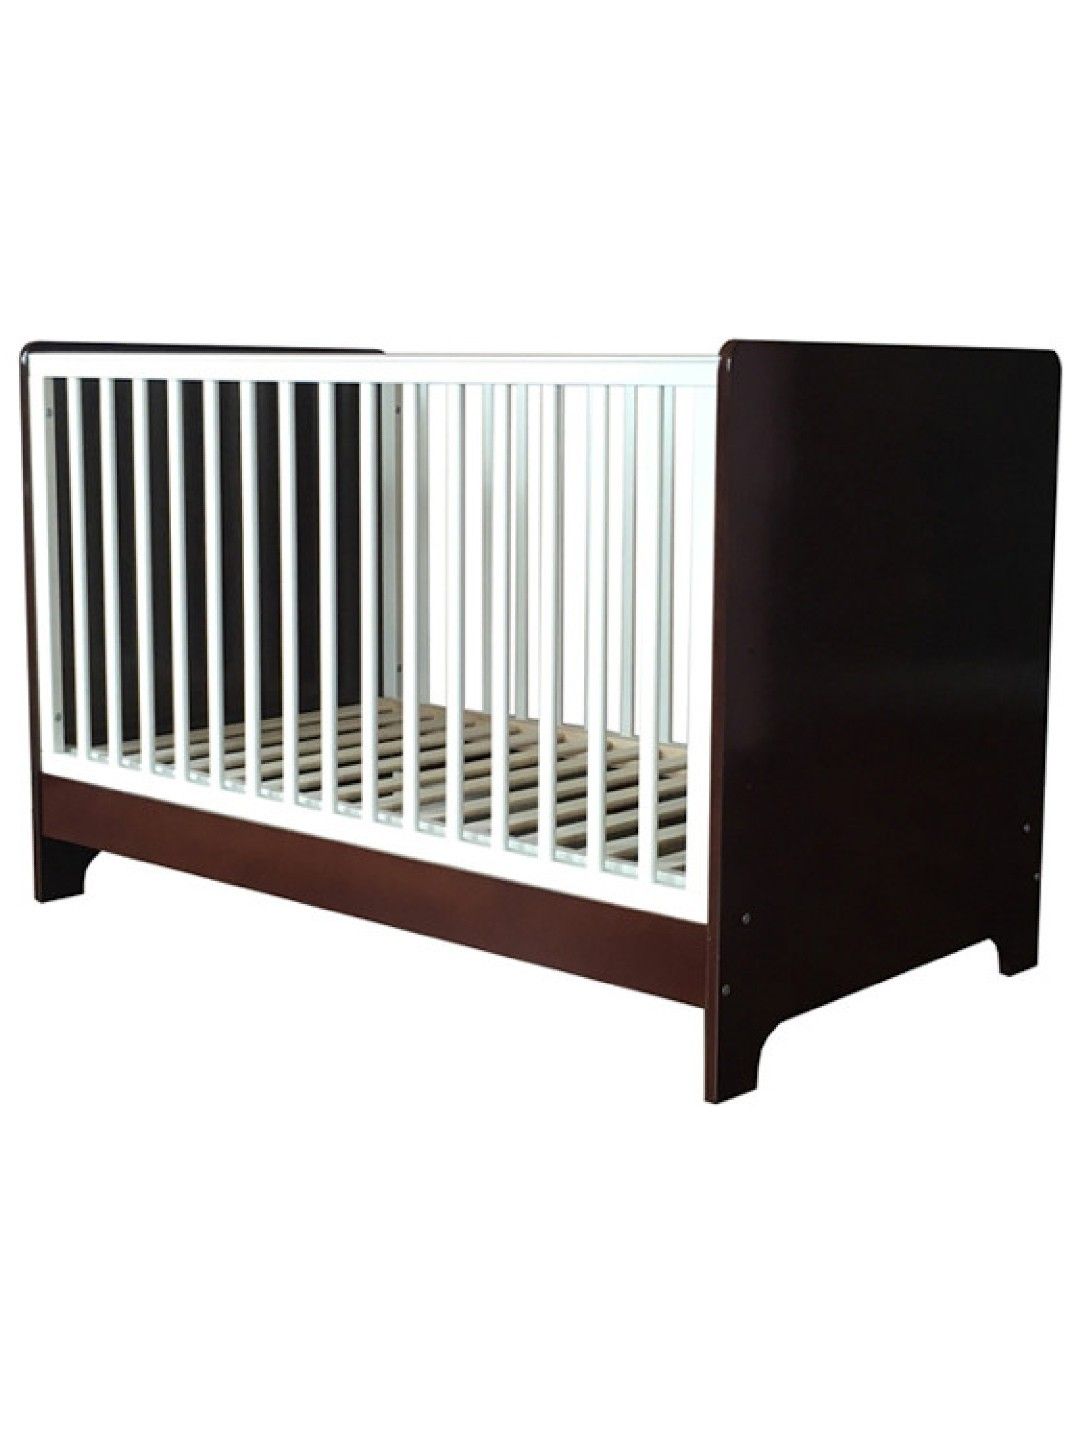 Cuddlebug Vernon 3in1 Convertible Crib (White-Coffee- Image 4)